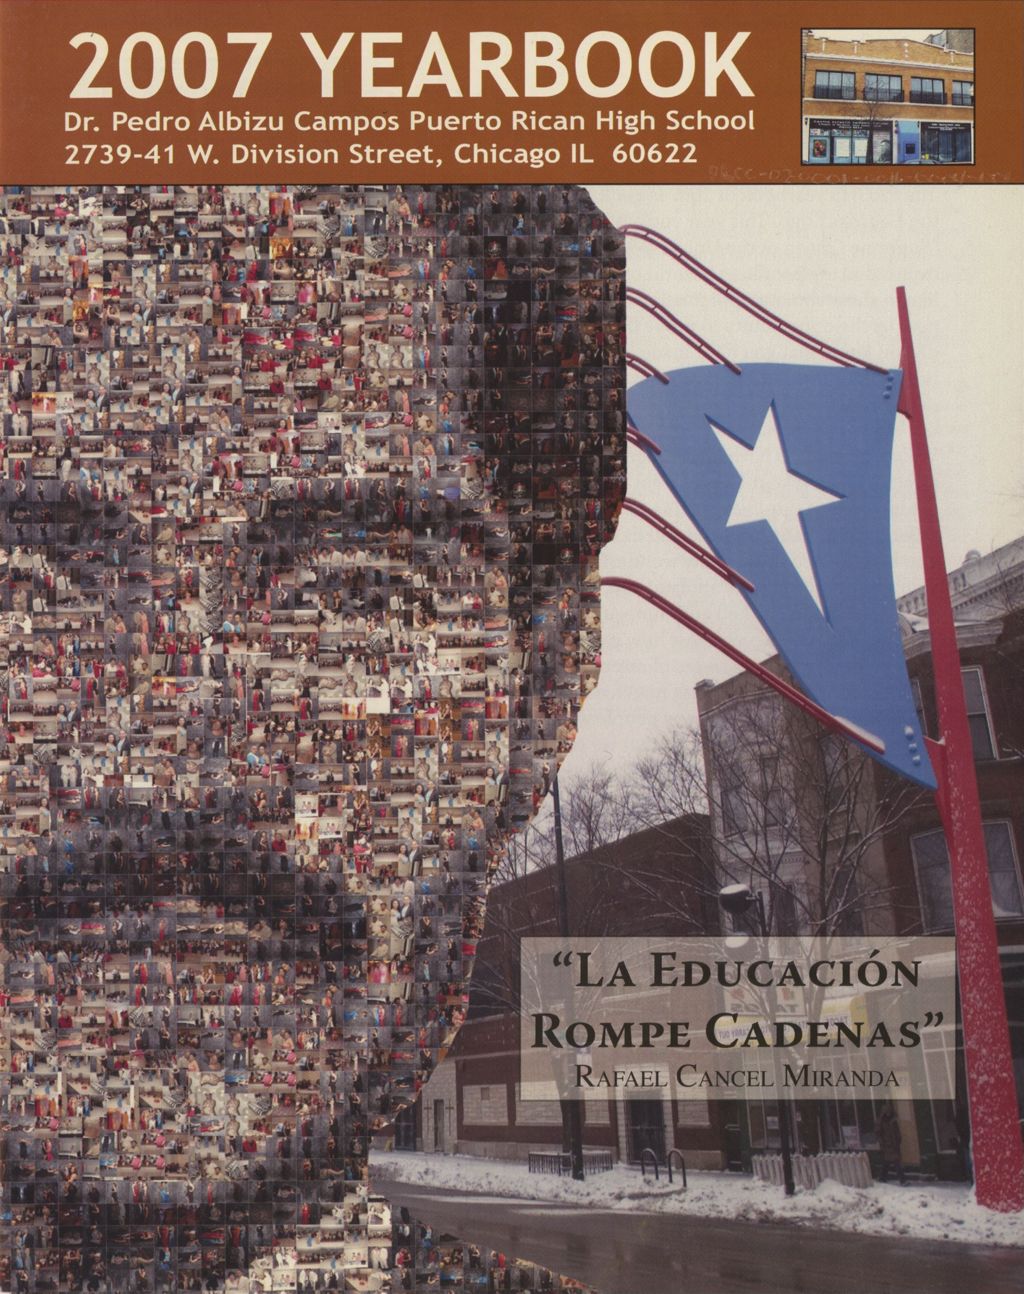 Miniature of Dr. Pedro Albizu Campos Puerto Rican High School; 2007 Yearbook